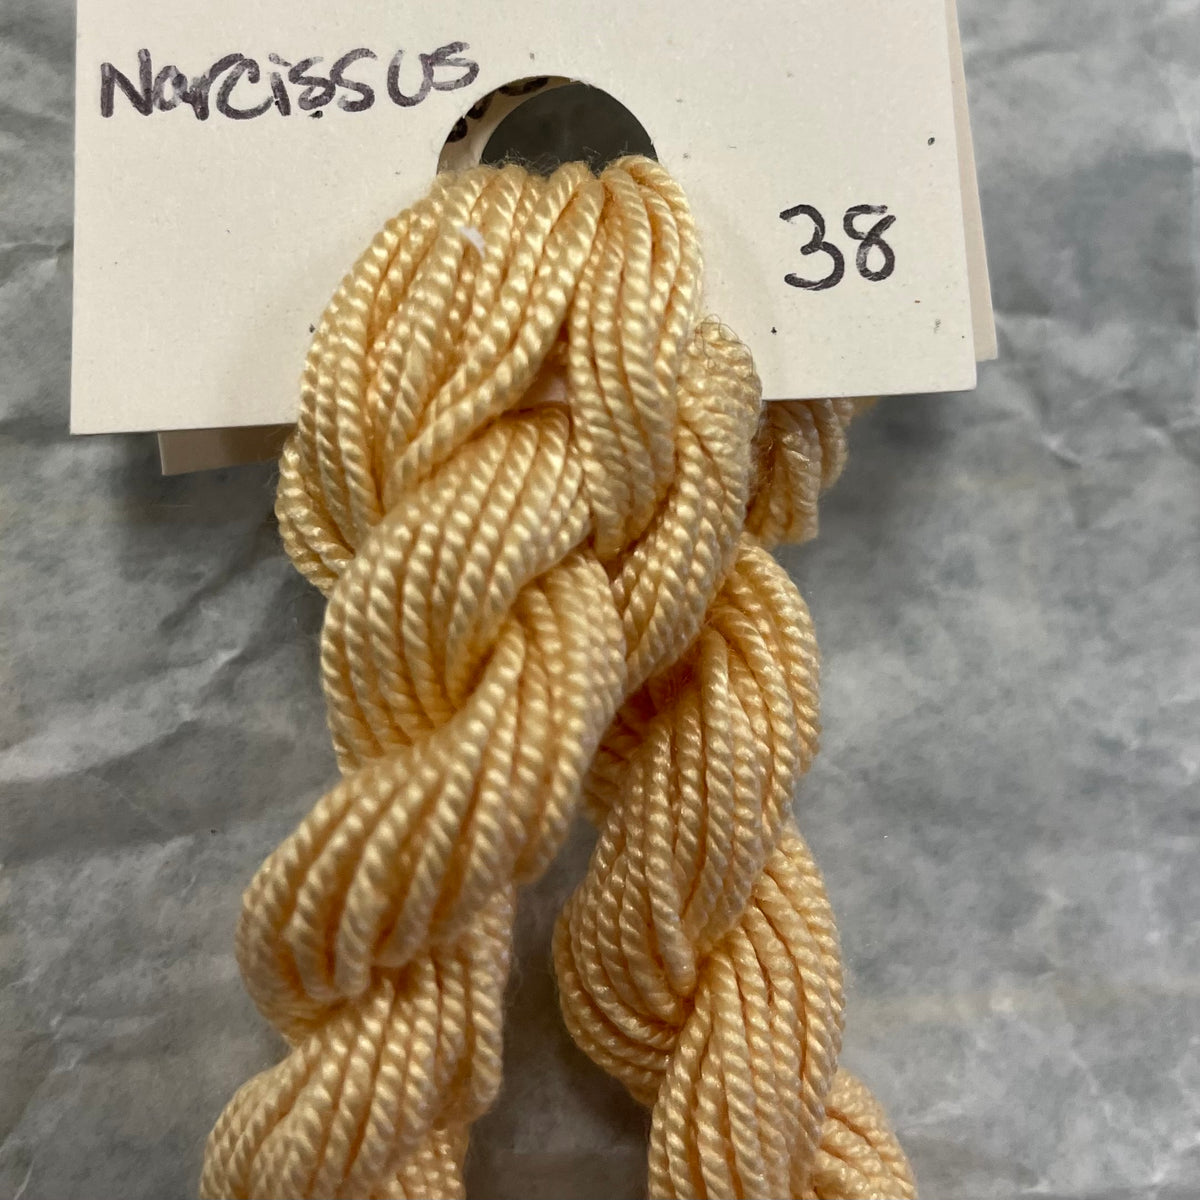 38 Narcissus - Shinju Silk Thread Solid